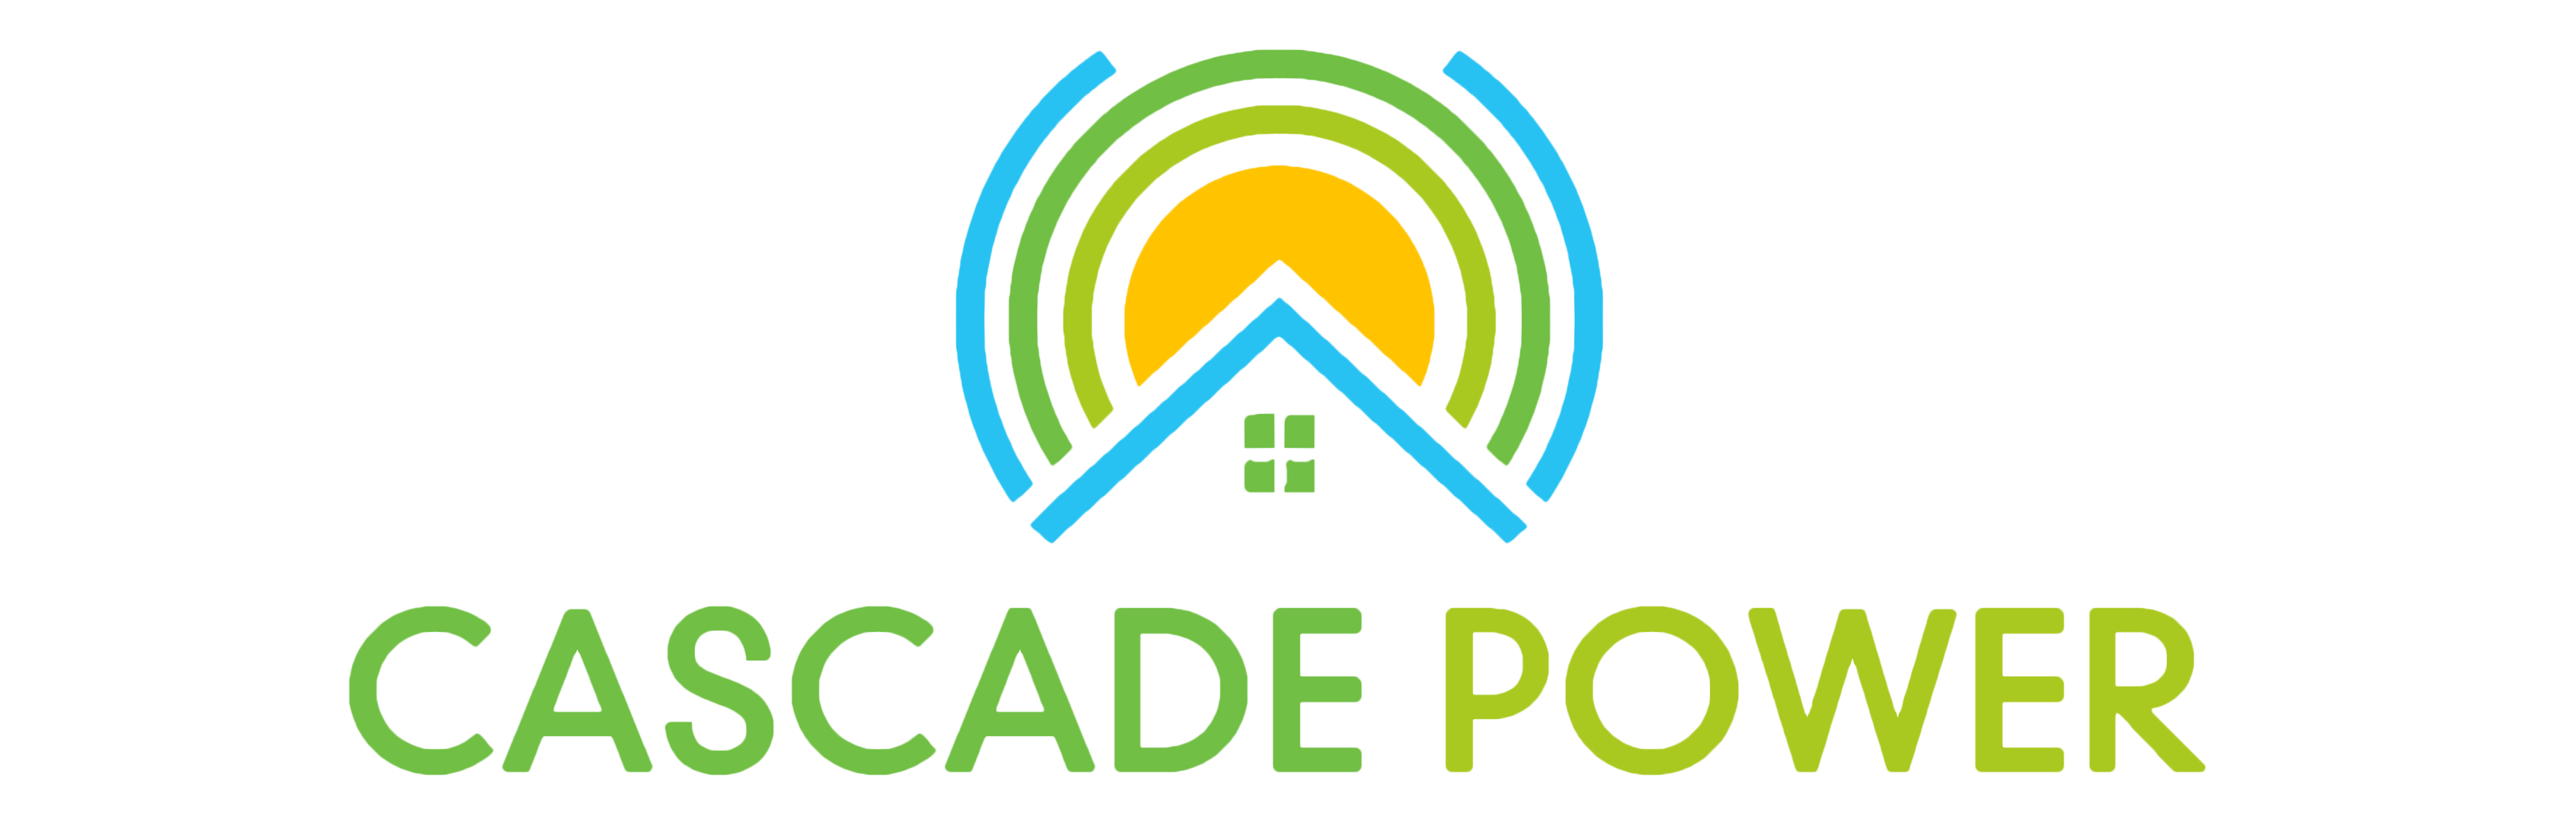 Cascade Power